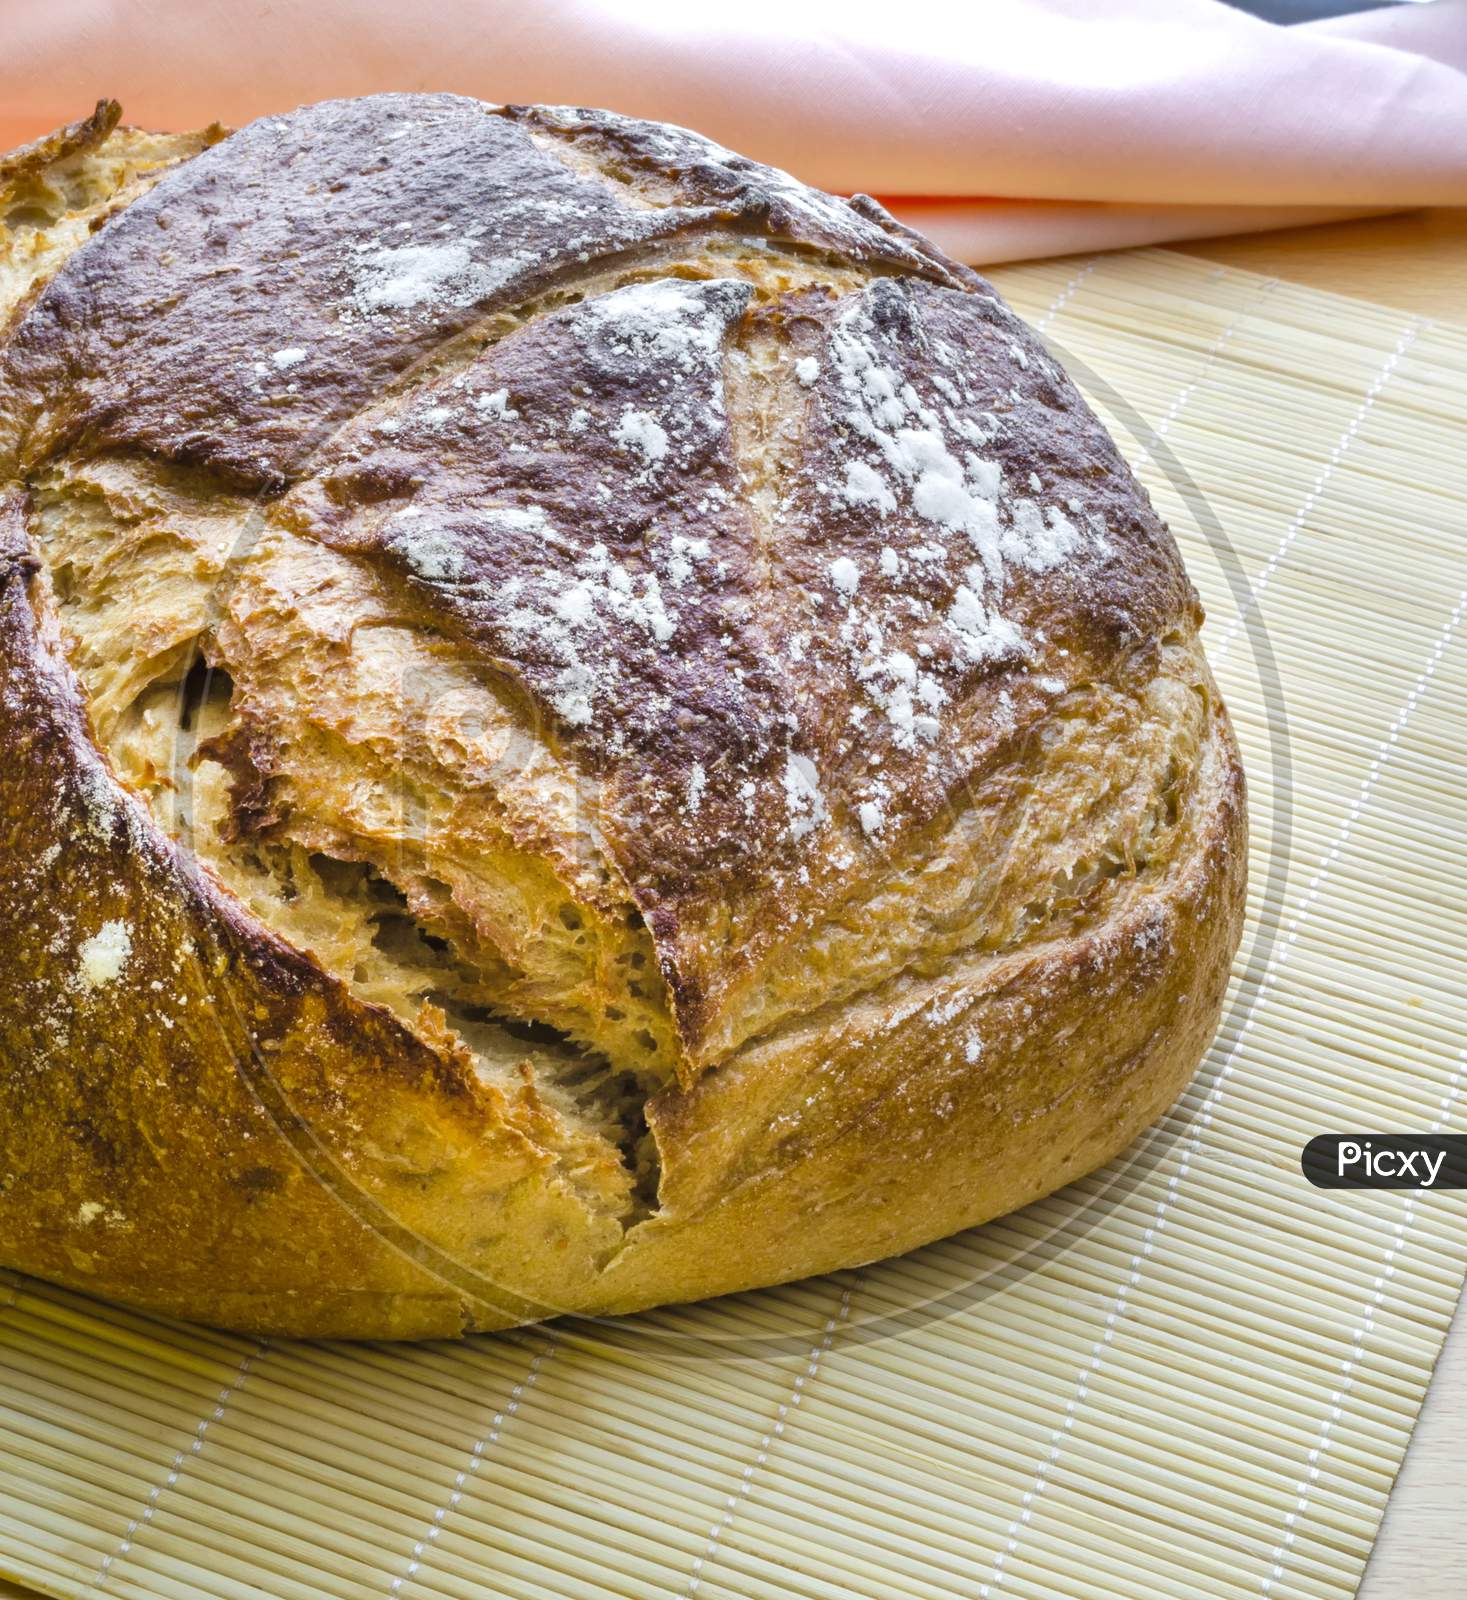 A loaf of sourdough bread freshly baked.